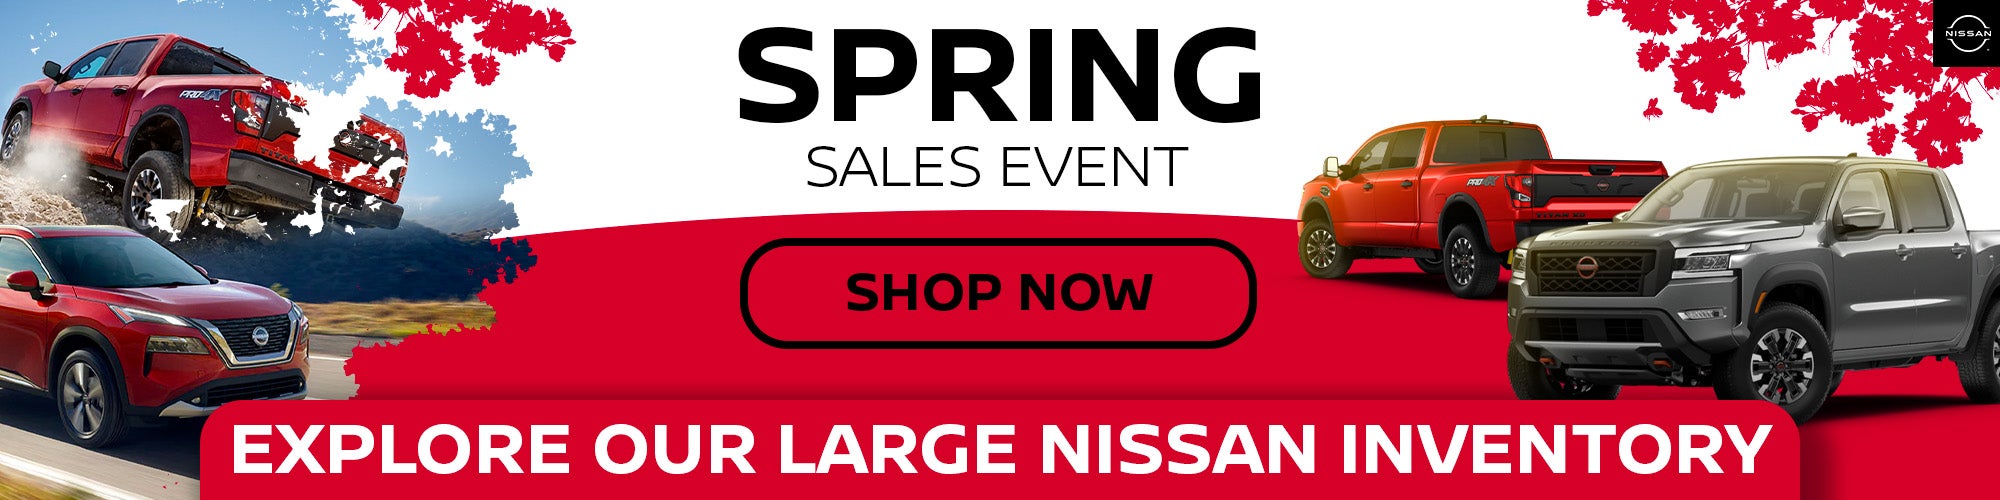 Spring Sales Event - Shop Now